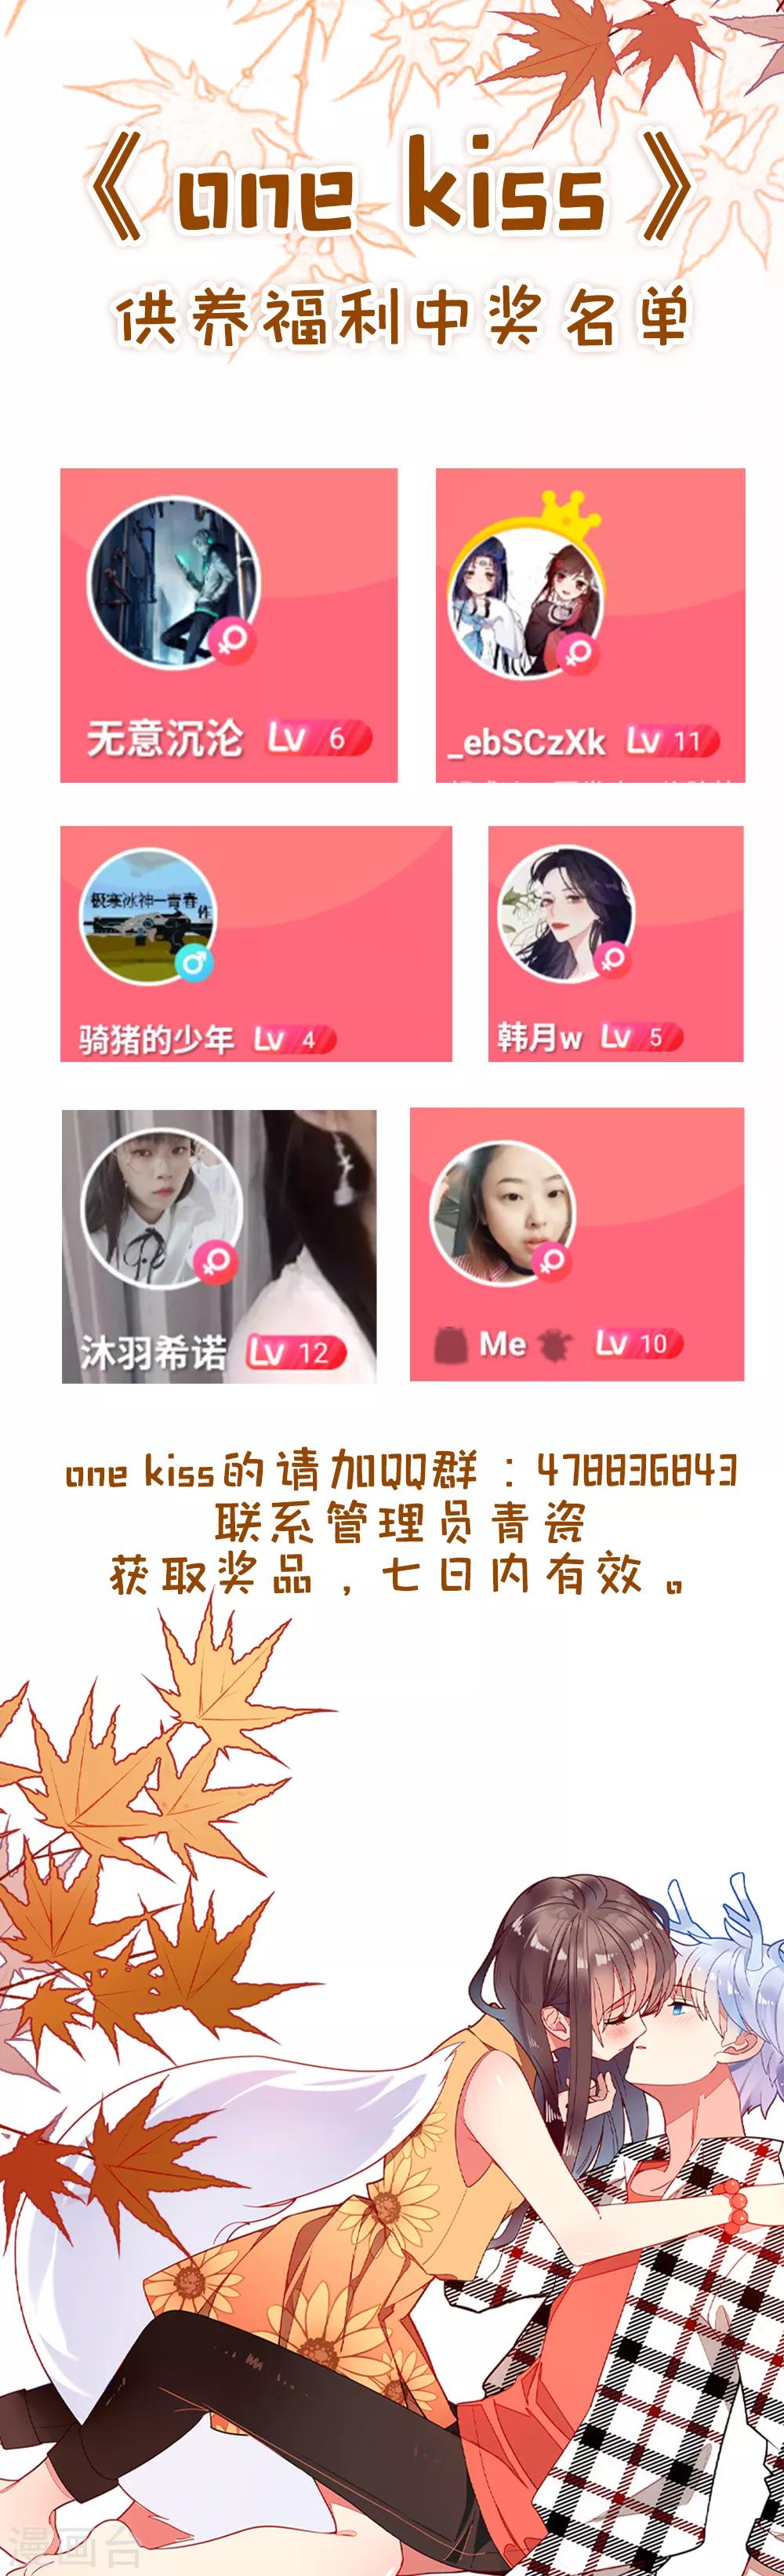 One Kiss A Day - 12月2日供养中奖名单 - 1